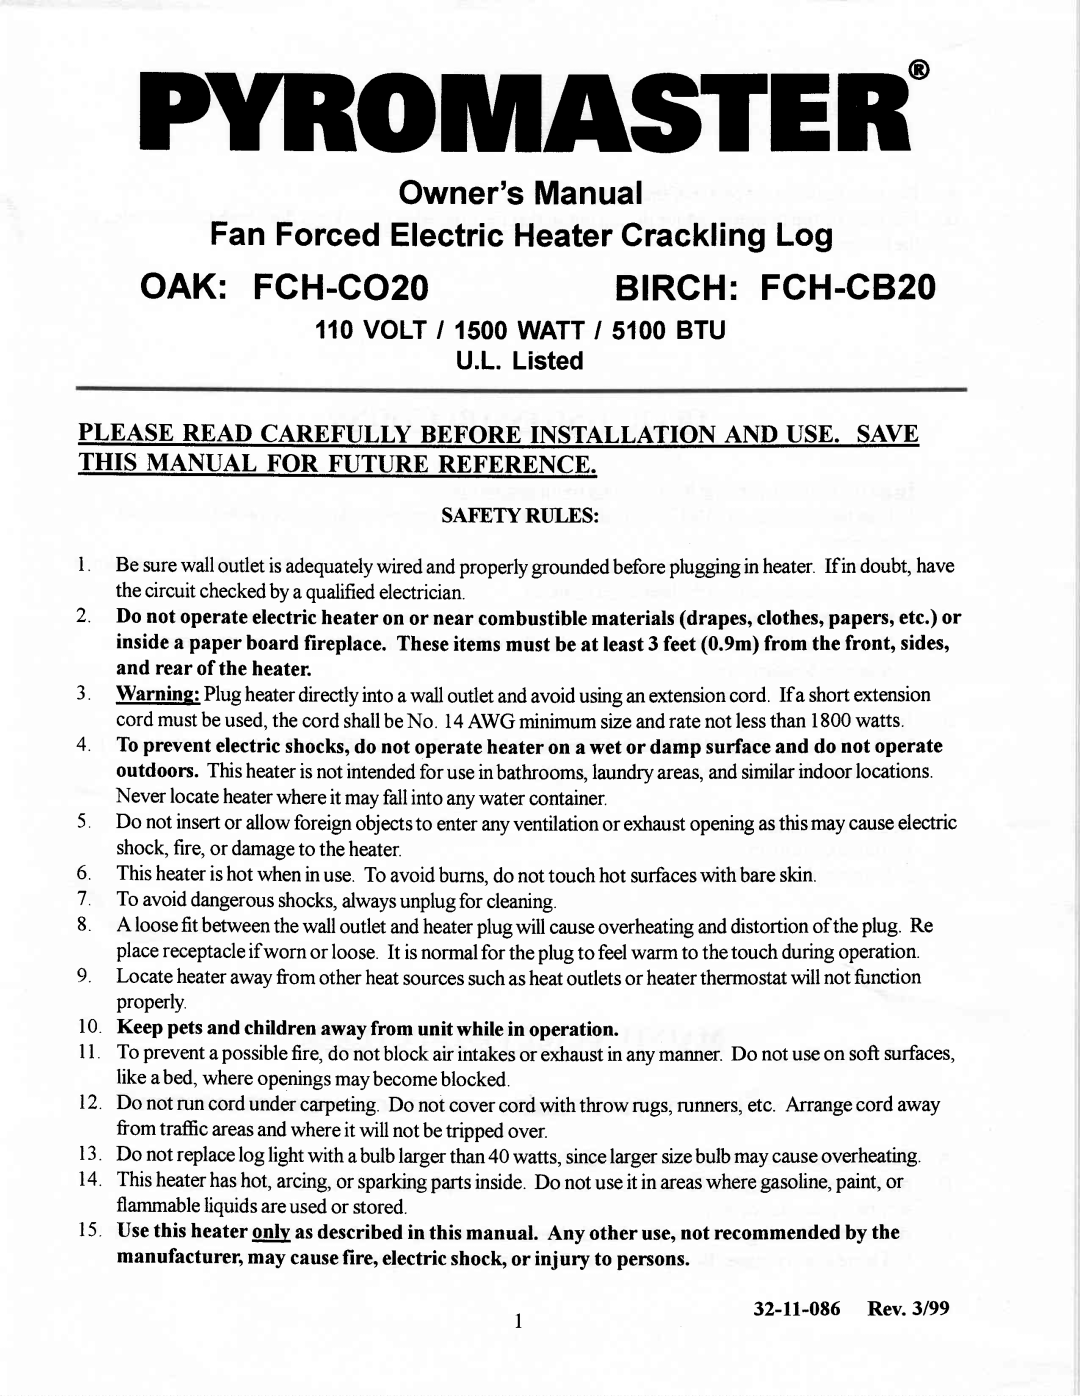 Vermont Casting owner manual Momasteh, OAK FCH-CO2O BIRCH FCH-C820, OwnersManual FanForcedElectricHeaterCracklingLog 